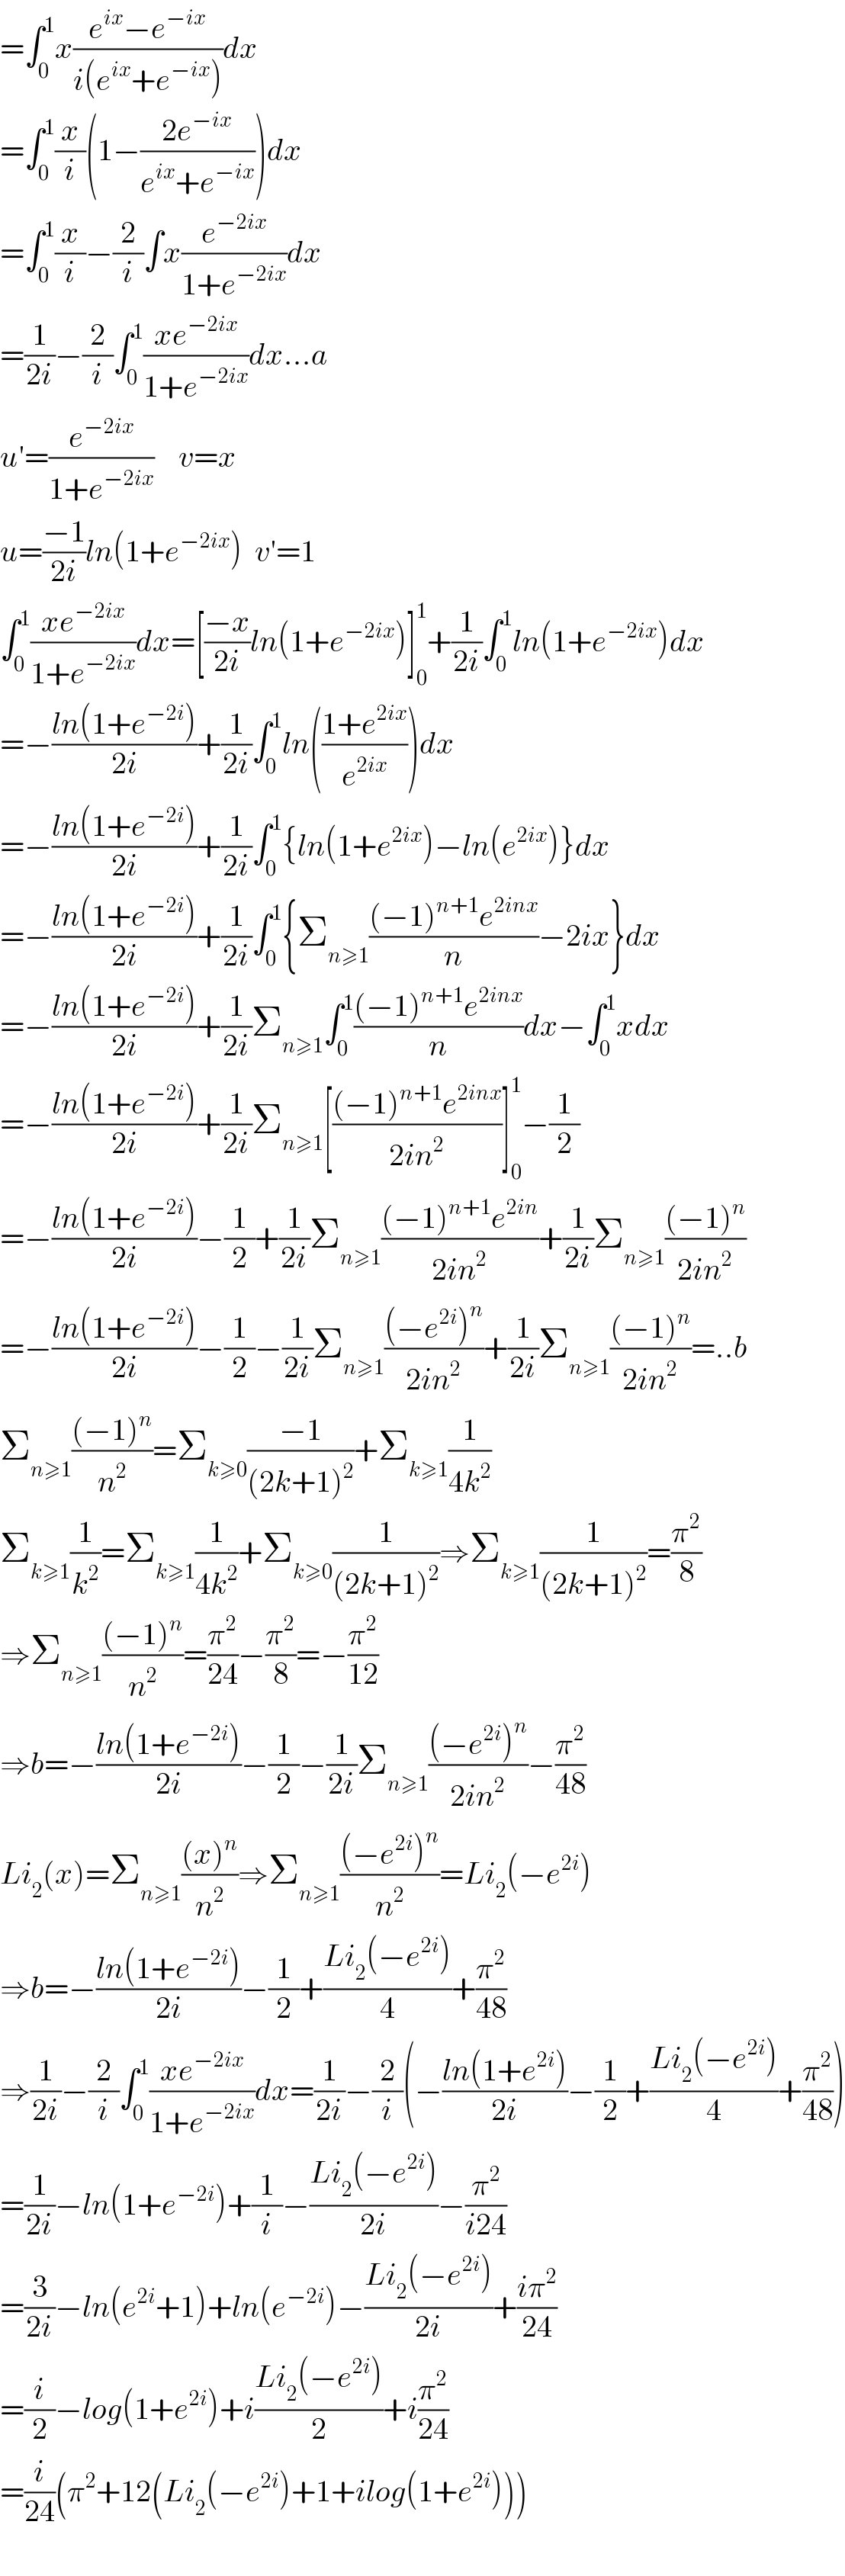 =∫_0 ^1 x((e^(ix) −e^(−ix) )/(i(e^(ix) +e^(−ix) )))dx  =∫_0 ^1 (x/i)(1−((2e^(−ix) )/(e^(ix) +e^(−ix) )))dx  =∫_0 ^1 (x/i)−(2/i)∫x(e^(−2ix) /(1+e^(−2ix) ))dx  =(1/(2i))−(2/i)∫_0 ^1 ((xe^(−2ix) )/(1+e^(−2ix) ))dx...a  u′=(e^(−2ix) /(1+e^(−2ix) ))    v=x  u=((−1)/(2i))ln(1+e^(−2ix) )  v′=1  ∫_0 ^1 ((xe^(−2ix) )/(1+e^(−2ix) ))dx=[((−x)/(2i))ln(1+e^(−2ix) )]_0 ^1 +(1/(2i))∫_0 ^1 ln(1+e^(−2ix) )dx  =−((ln(1+e^(−2i) ))/(2i))+(1/(2i))∫_0 ^1 ln(((1+e^(2ix) )/e^(2ix) ))dx  =−((ln(1+e^(−2i) ))/(2i))+(1/(2i))∫_0 ^1 {ln(1+e^(2ix) )−ln(e^(2ix) )}dx  =−((ln(1+e^(−2i) ))/(2i))+(1/(2i))∫_0 ^1 {Σ_(n≥1) (((−1)^(n+1) e^(2inx) )/n)−2ix}dx  =−((ln(1+e^(−2i) ))/(2i))+(1/(2i))Σ_(n≥1) ∫_0 ^1 (((−1)^(n+1) e^(2inx) )/n)dx−∫_0 ^1 xdx  =−((ln(1+e^(−2i) ))/(2i))+(1/(2i))Σ_(n≥1) [(((−1)^(n+1) e^(2inx) )/(2in^2 ))]_0 ^1 −(1/2)  =−((ln(1+e^(−2i) ))/(2i))−(1/2)+(1/(2i))Σ_(n≥1) (((−1)^(n+1) e^(2in) )/(2in^2 ))+(1/(2i))Σ_(n≥1) (((−1)^n )/(2in^2 ))  =−((ln(1+e^(−2i) ))/(2i))−(1/2)−(1/(2i))Σ_(n≥1) (((−e^(2i) )^n )/(2in^2 ))+(1/(2i))Σ_(n≥1) (((−1)^n )/(2in^2 ))=..b  Σ_(n≥1) (((−1)^n )/n^2 )=Σ_(k≥0) ((−1)/((2k+1)^2 ))+Σ_(k≥1) (1/(4k^2 ))  Σ_(k≥1) (1/k^2 )=Σ_(k≥1) (1/(4k^2 ))+Σ_(k≥0) (1/((2k+1)^2 ))⇒Σ_(k≥1) (1/((2k+1)^2 ))=(π^2 /8)  ⇒Σ_(n≥1) (((−1)^n )/n^2 )=(π^2 /(24))−(π^2 /8)=−(π^2 /(12))  ⇒b=−((ln(1+e^(−2i) ))/(2i))−(1/2)−(1/(2i))Σ_(n≥1) (((−e^(2i) )^n )/(2in^2 ))−(π^2 /(48))  Li_2 (x)=Σ_(n≥1) (((x)^n )/n^2 )⇒Σ_(n≥1) (((−e^(2i) )^n )/n^2 )=Li_2 (−e^(2i) )  ⇒b=−((ln(1+e^(−2i) ))/(2i))−(1/2)+((Li_2 (−e^(2i) ))/4)+(π^2 /(48))  ⇒(1/(2i))−(2/i)∫_0 ^1 ((xe^(−2ix) )/(1+e^(−2ix) ))dx=(1/(2i))−(2/i)(−((ln(1+e^(2i) ))/(2i))−(1/2)+((Li_2 (−e^(2i) ))/4)+(π^2 /(48)))  =(1/(2i))−ln(1+e^(−2i) )+(1/i)−((Li_2 (−e^(2i) ))/(2i))−(π^2 /(i24))  =(3/(2i))−ln(e^(2i) +1)+ln(e^(−2i) )−((Li_2 (−e^(2i) ))/(2i))+((iπ^2 )/(24))  =(i/2)−log(1+e^(2i) )+i((Li_2 (−e^(2i) ))/2)+i(π^2 /(24))  =(i/(24))(π^2 +12(Li_2 (−e^(2i) )+1+ilog(1+e^(2i) )))    